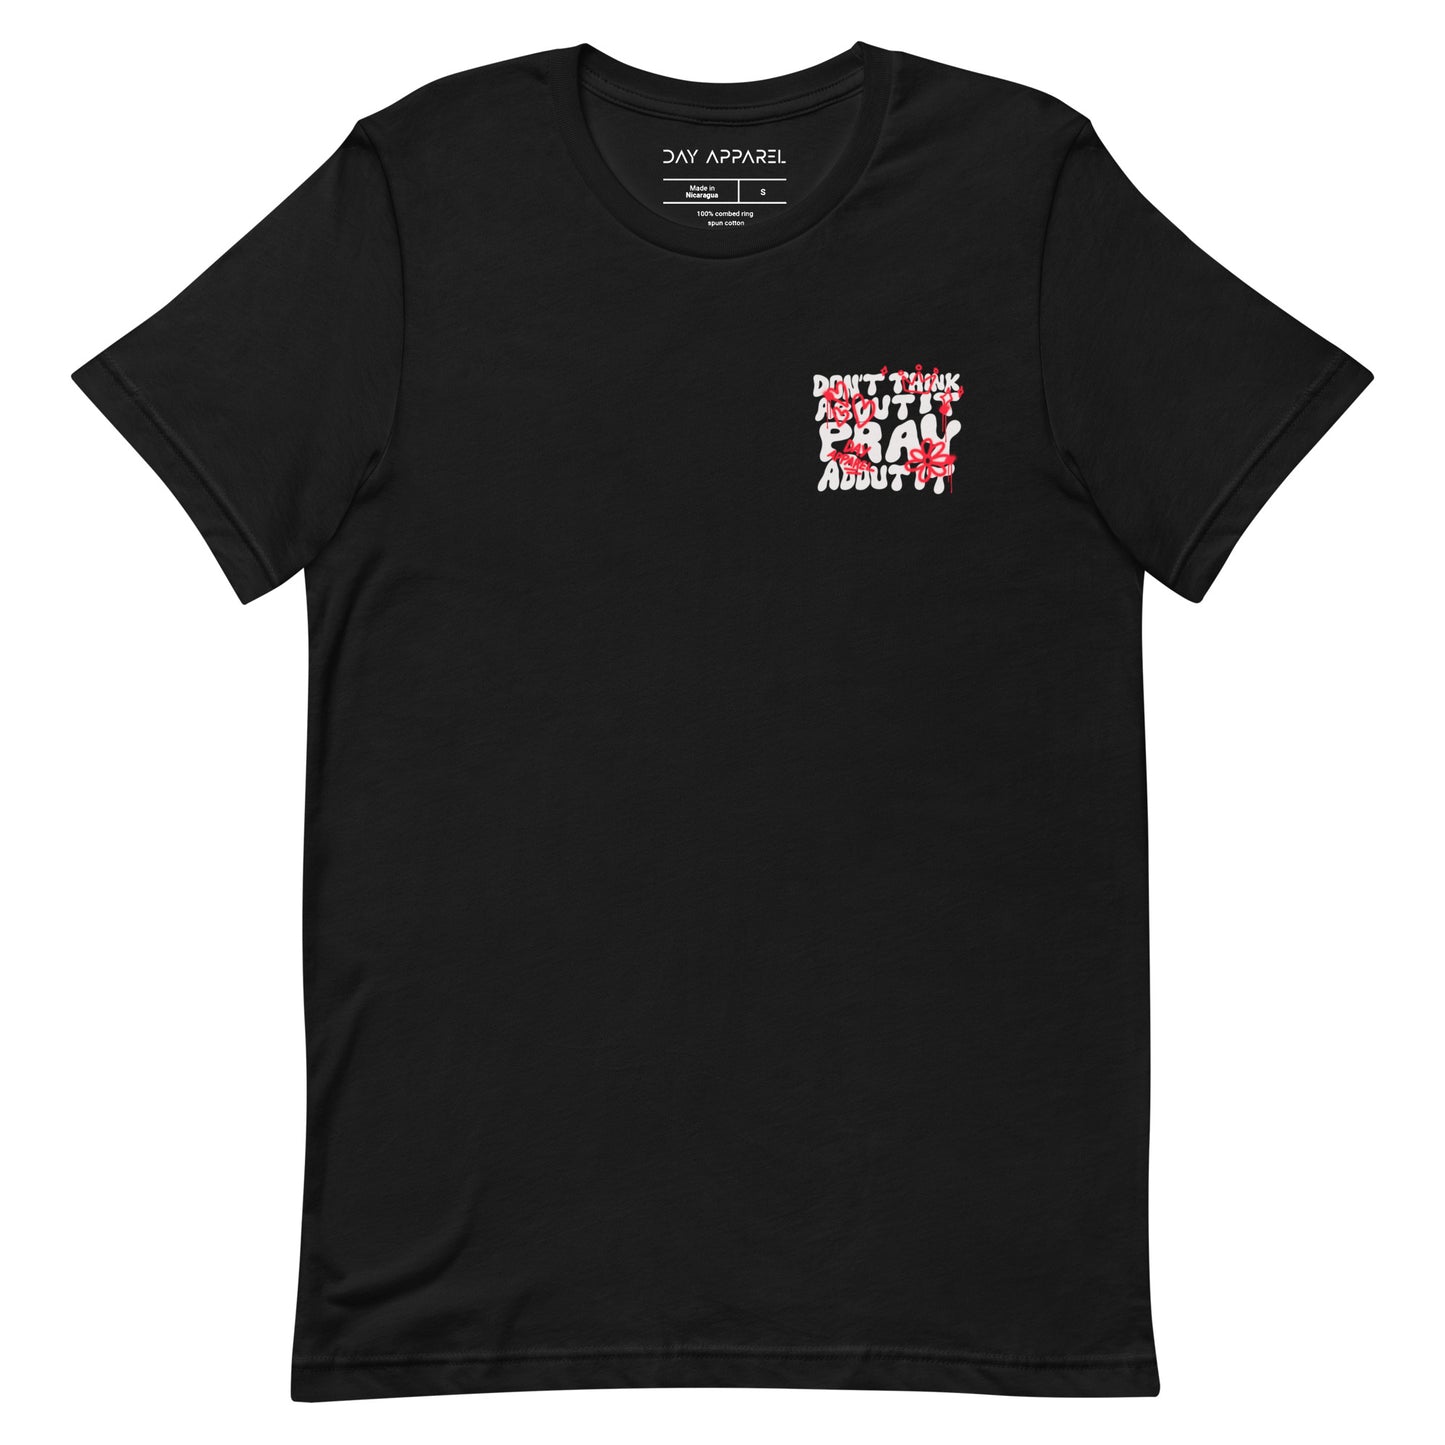 Pray About It T-shirt (Black)